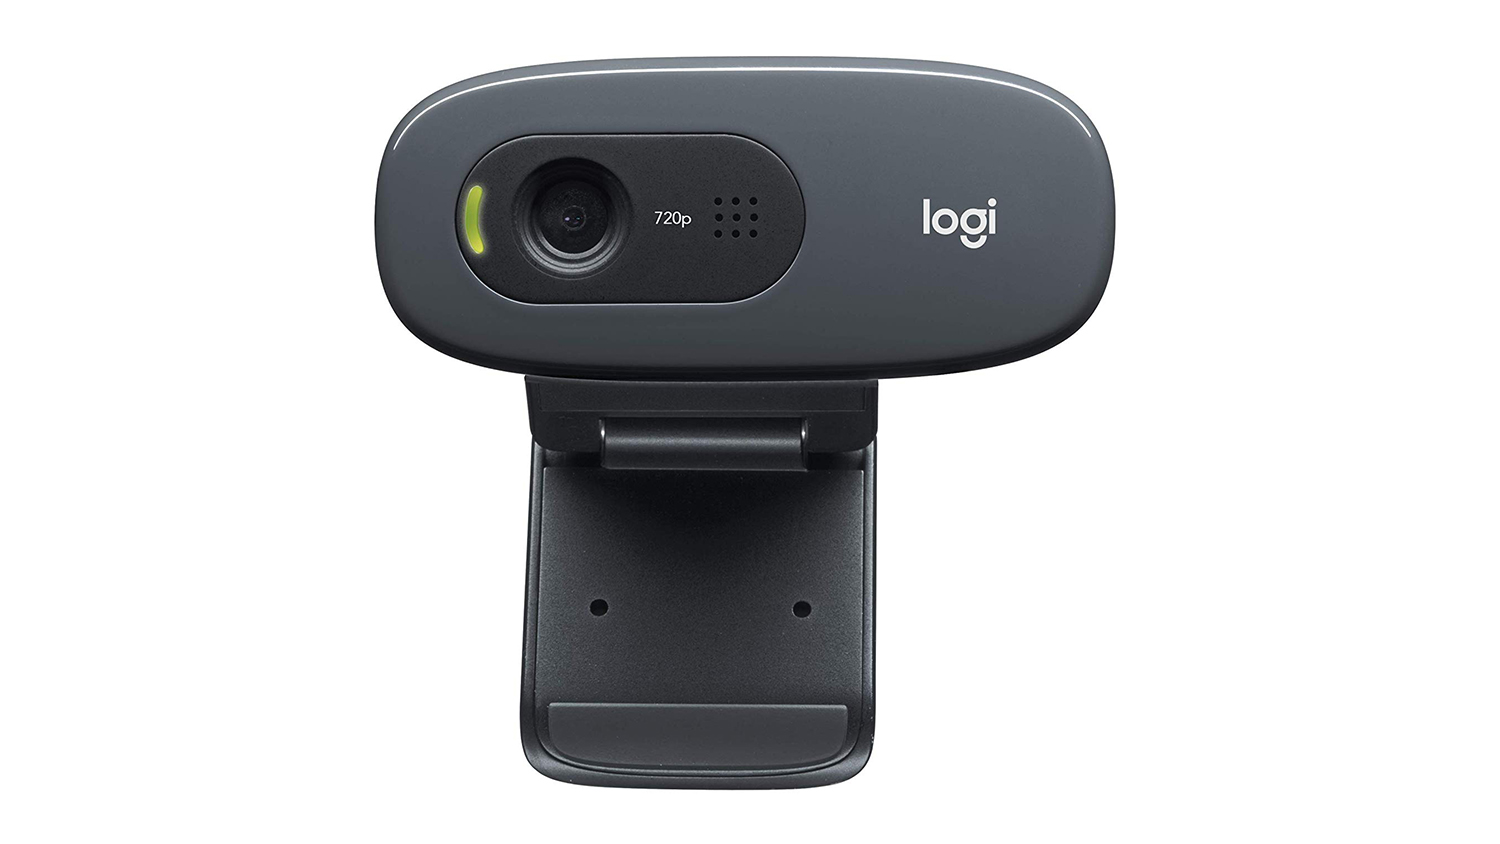 logitech webcam driver for windows 10